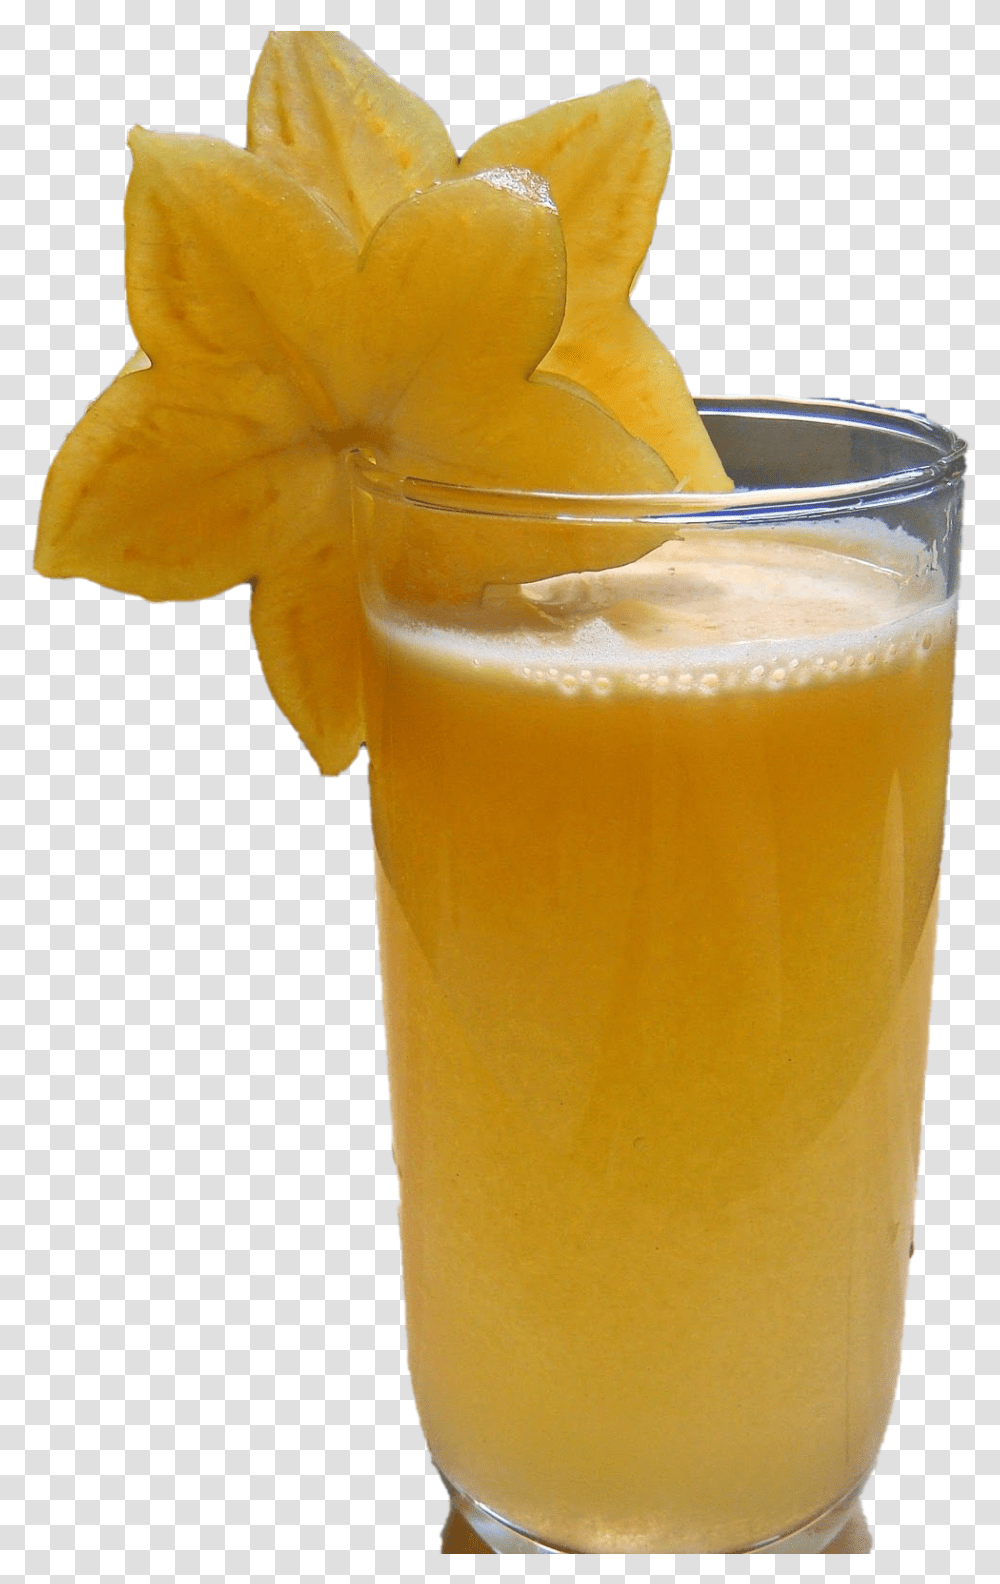 Starfruit Juice Hd Papaya Juice, Beverage, Drink, Beer, Alcohol Transparent Png